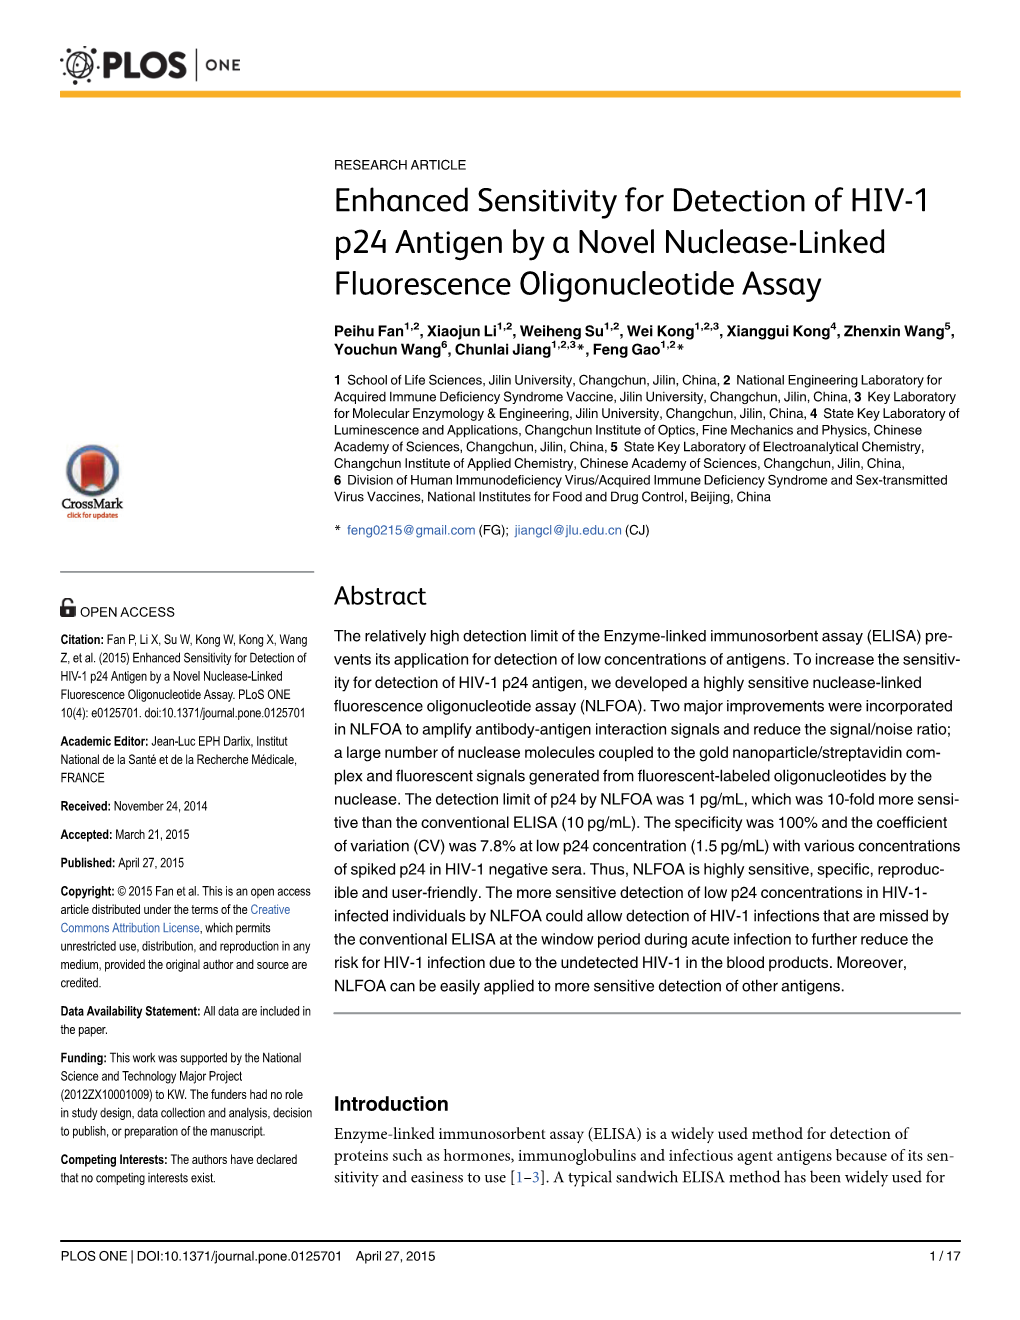 Enhanced Sensitivity for Detection of HIV-1 P24 Antigen by a Novel Nuclease-Linked Fluorescence Oligonucleotide Assay